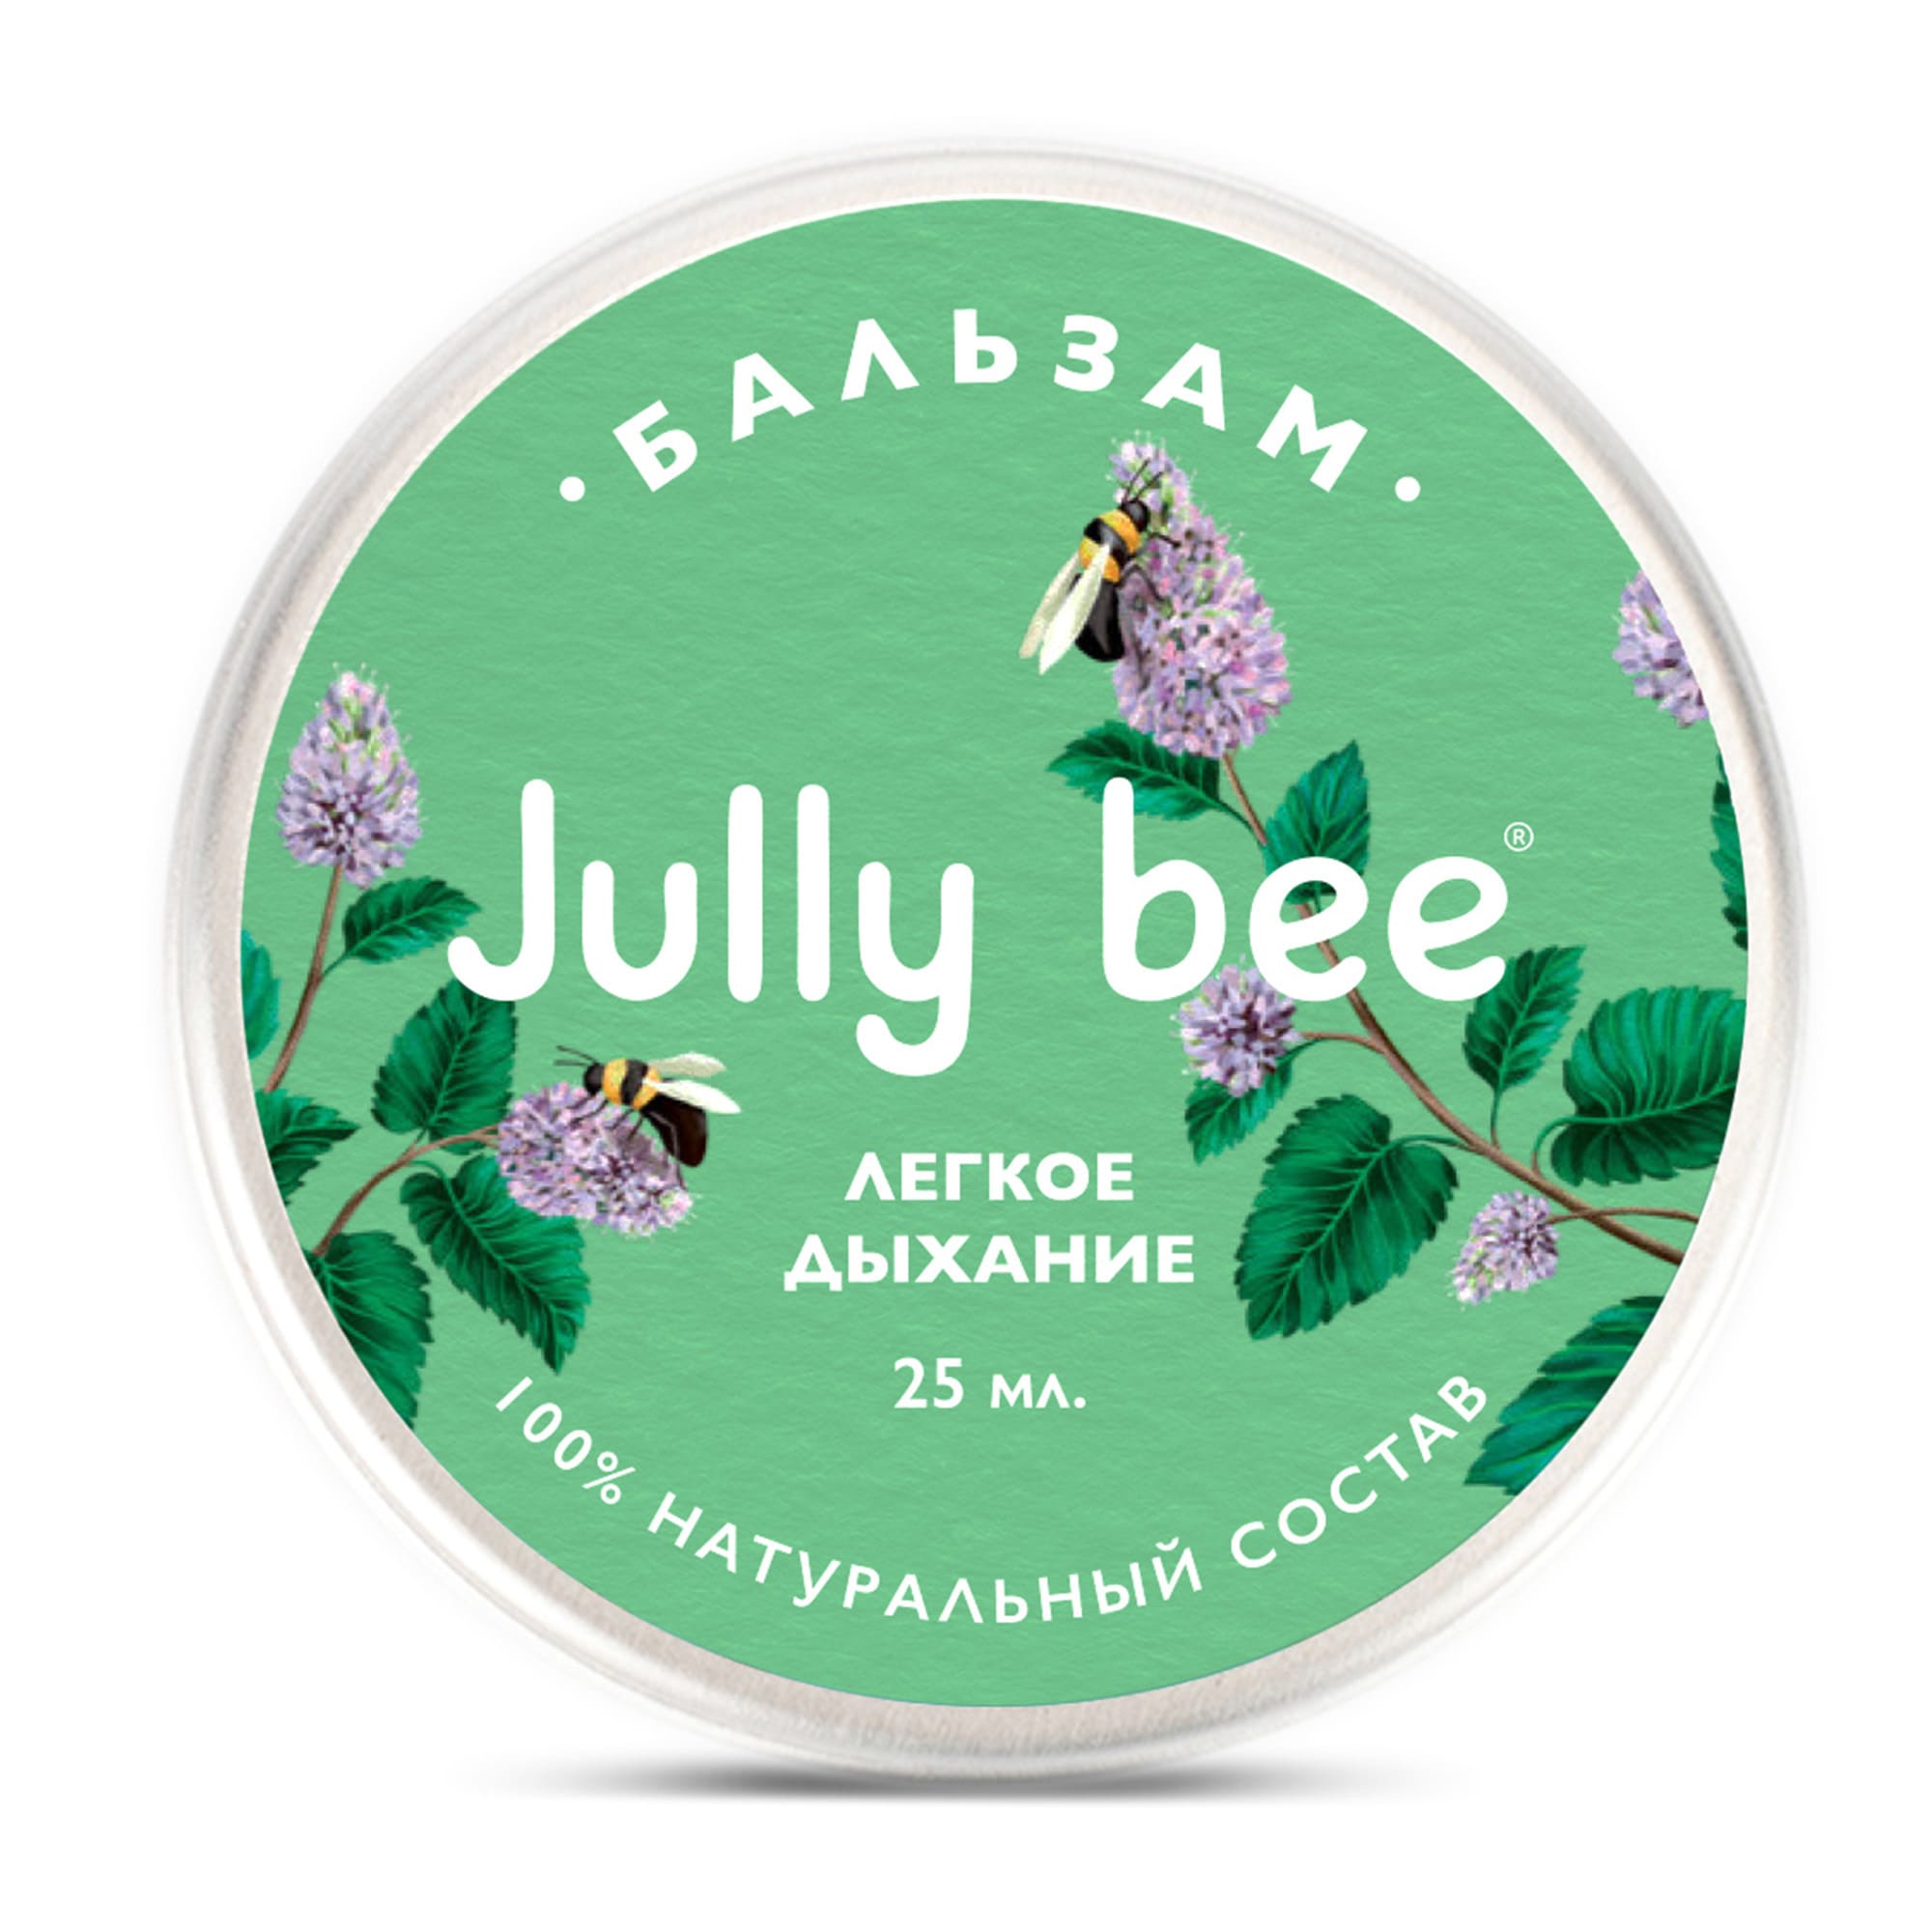 Бальзам для тела Jully Bee легкое дыхание, лечебный, 25 мл